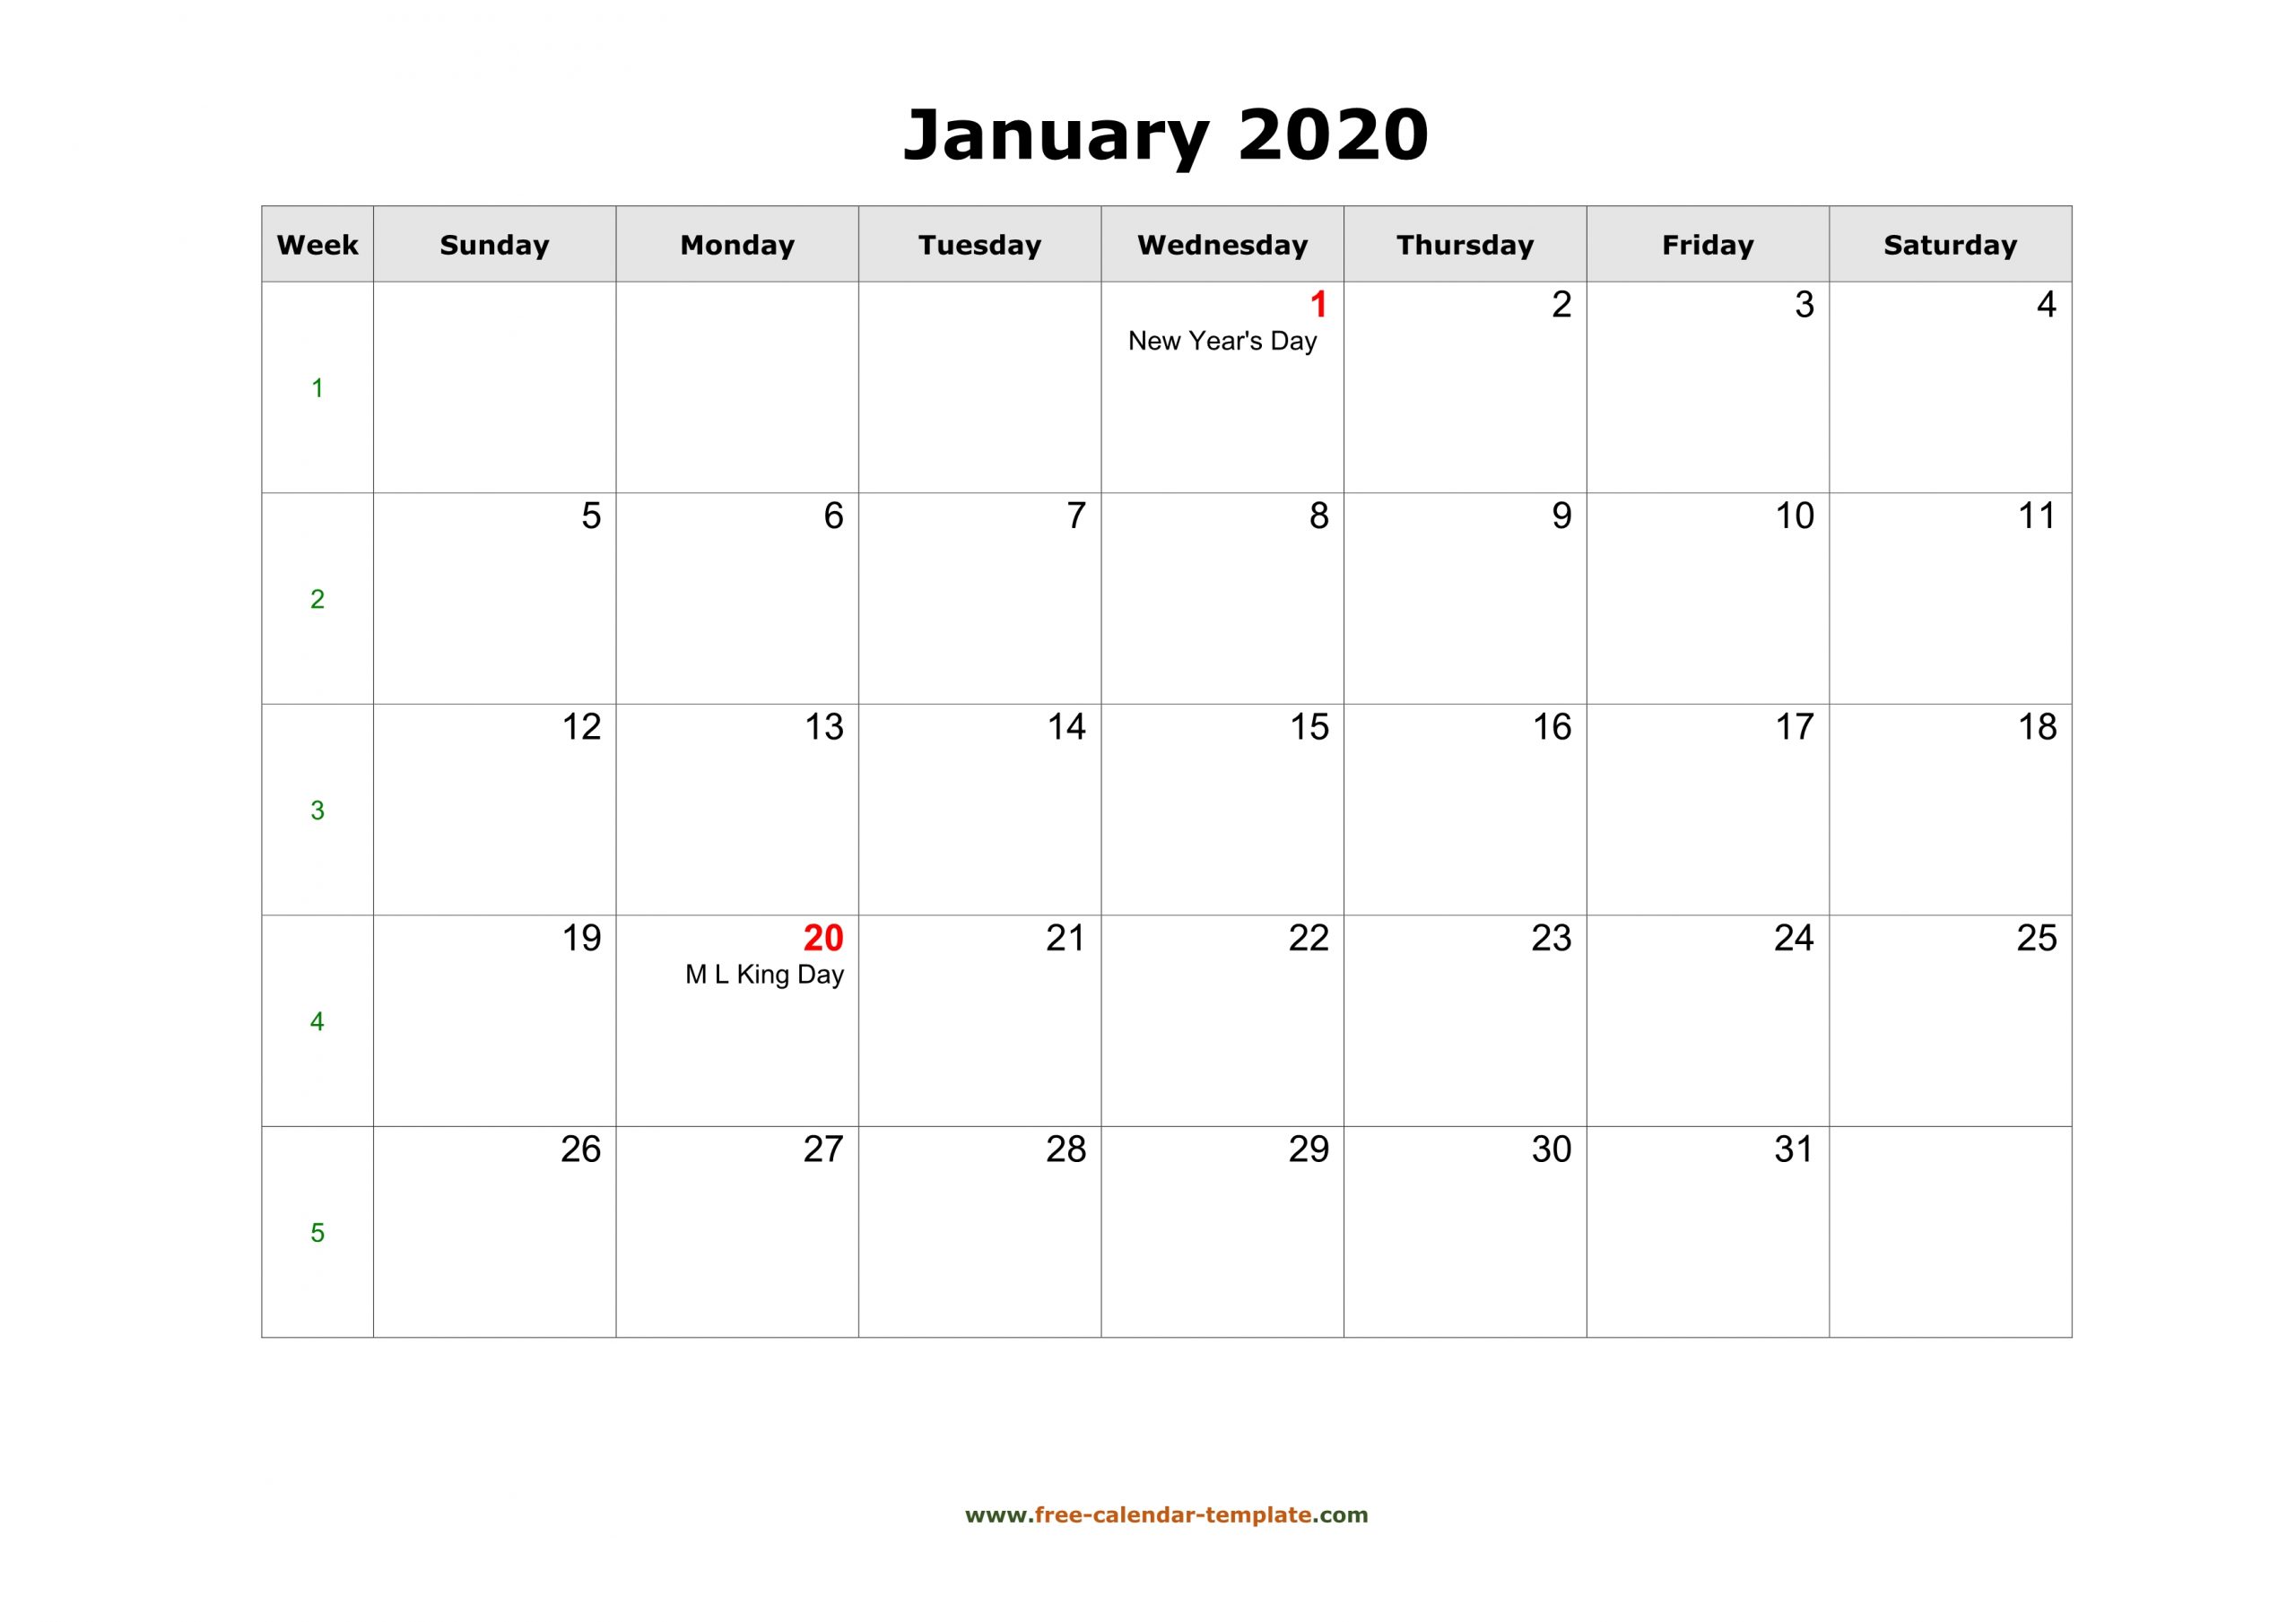 January 2020 Free Calendar Tempplate | Free-Calendar